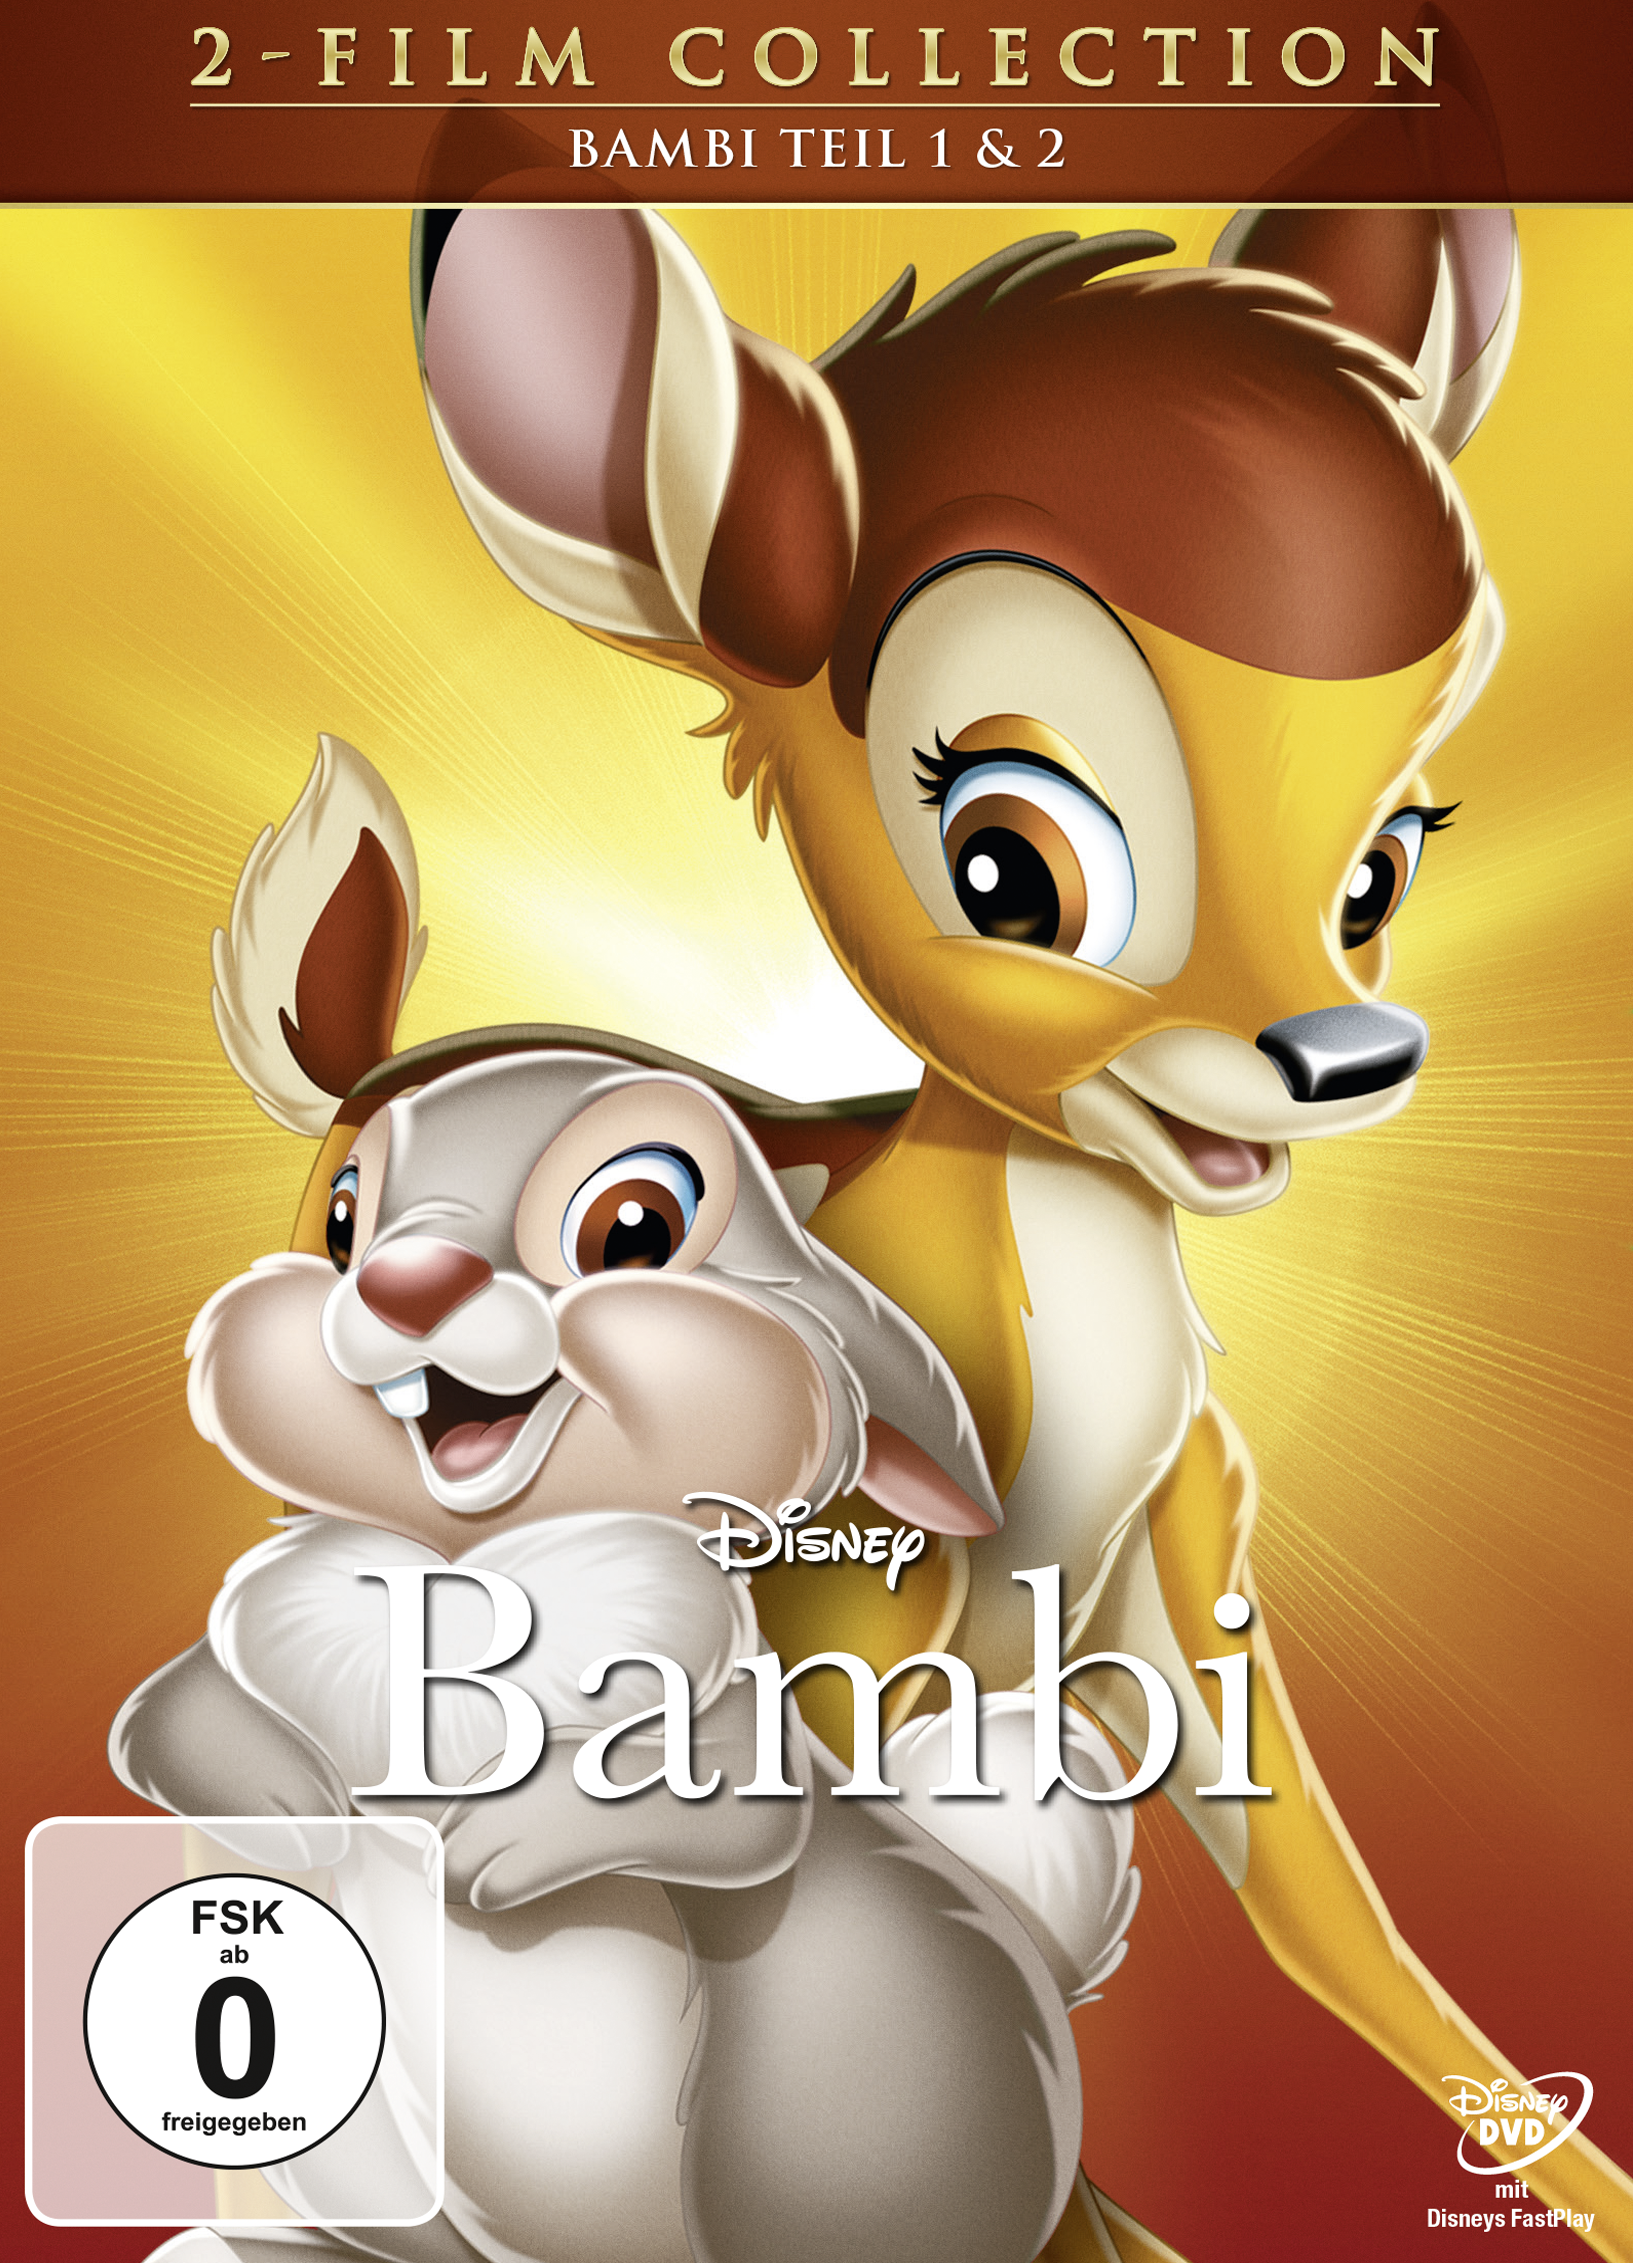 Bambi 1 & 2 DVD